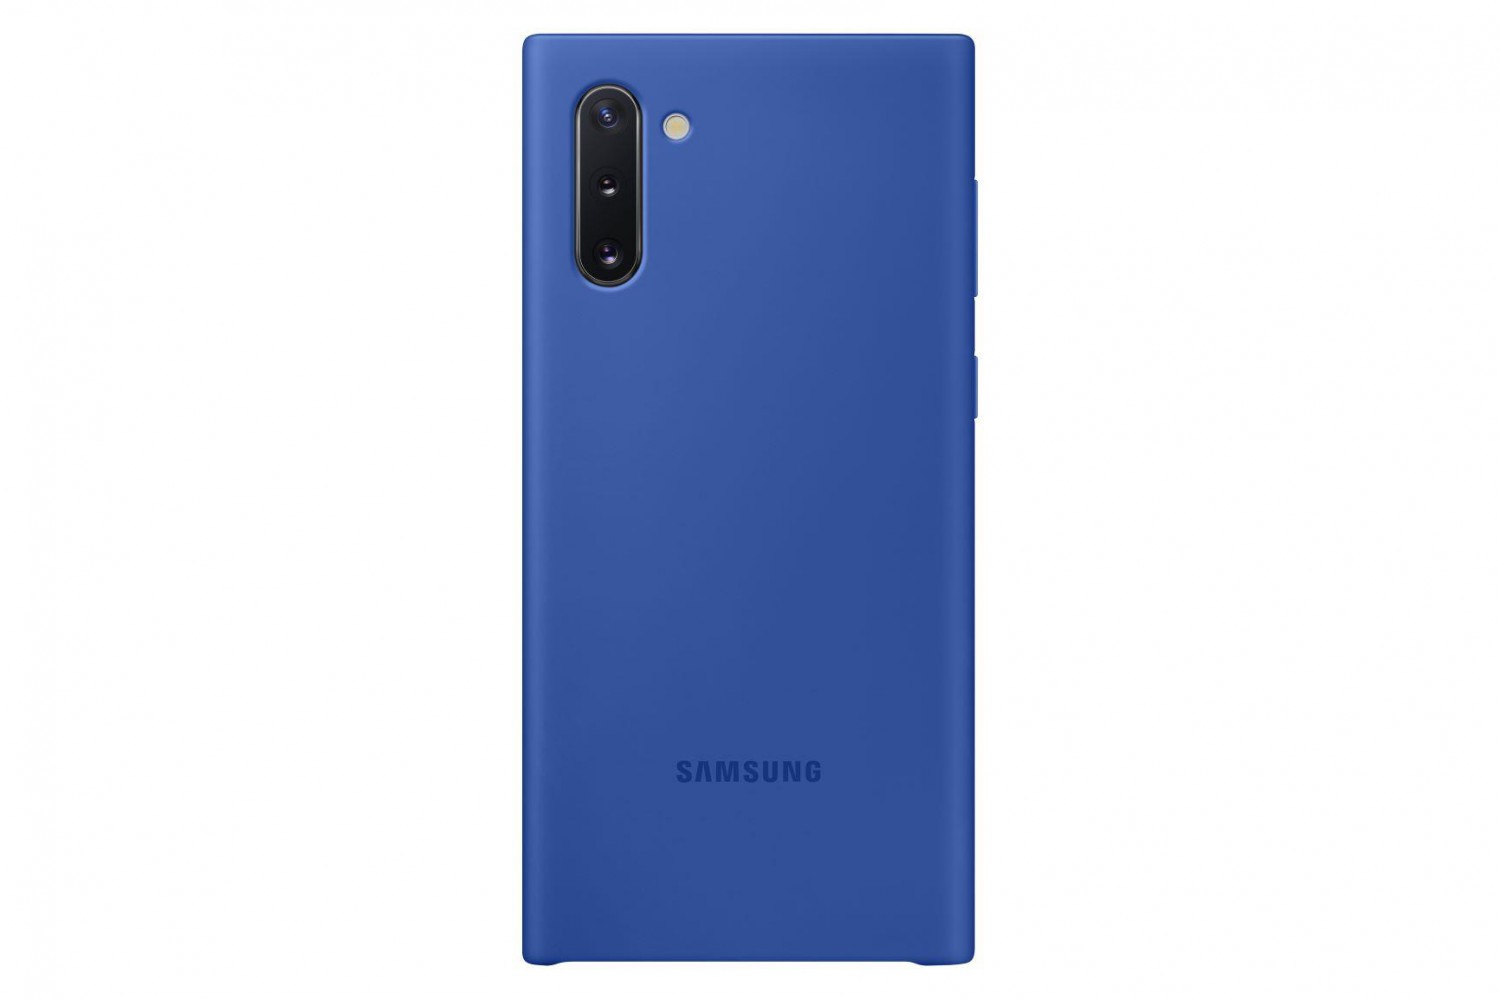 Silikonové pouzdro Silicone Cover EF-PN970TLEGWW pro Samsung Galaxy Note 10, modrá